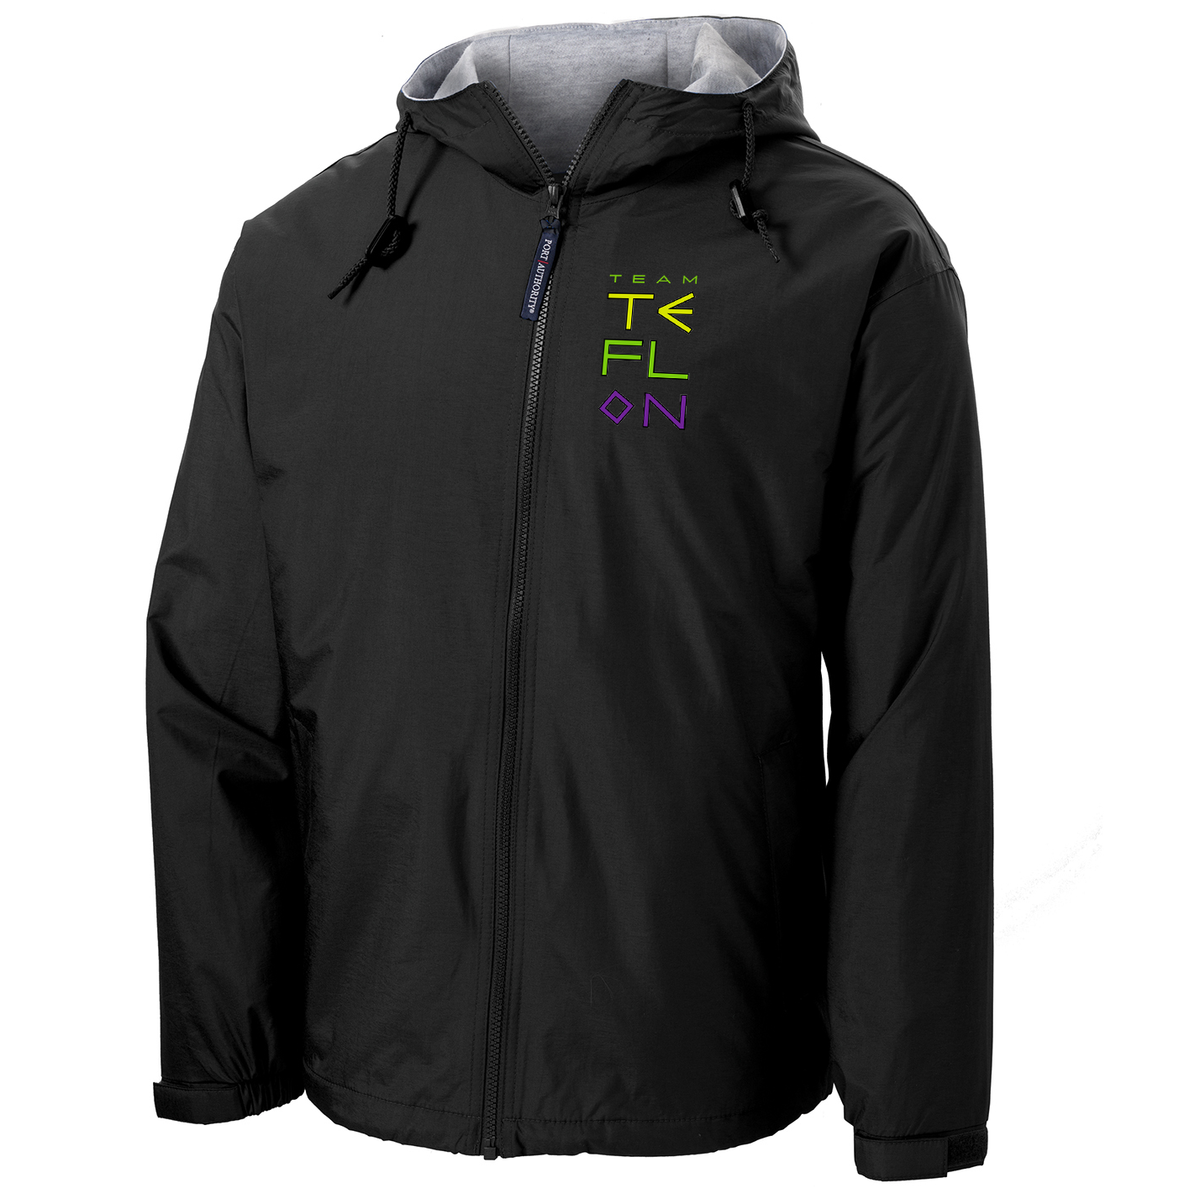 Team Teflon Softball Hooded Jacket